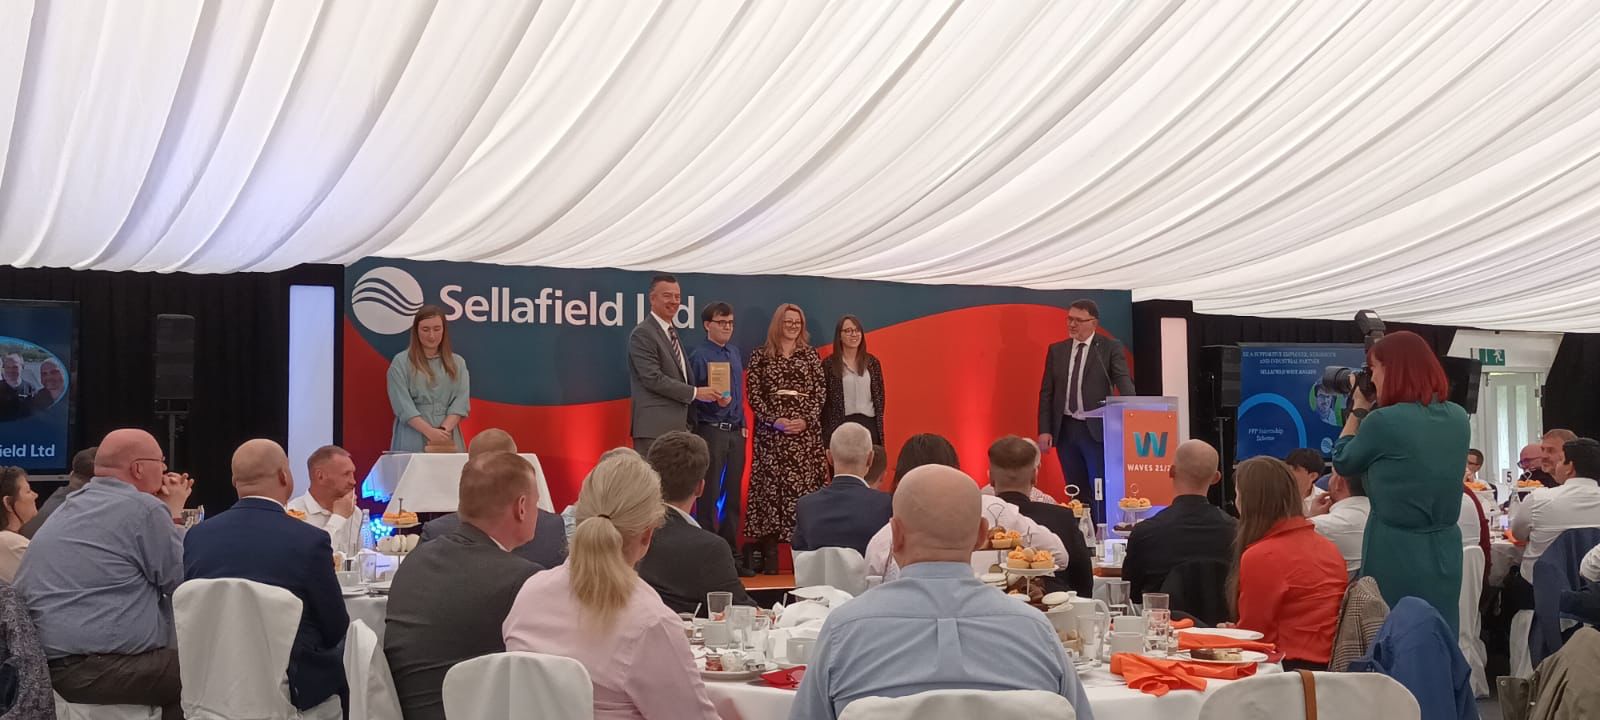 Pictured L-R: Sellafield Ltd CEO Martin Chown presenting John Atkinson (KBR Intern), Caroline Hindmarch (PPP Internship Scheme Lead) and Kathryn Ambrose (Sellafield Ltd Social Impact Lead) with a Sellafield Wave Award.